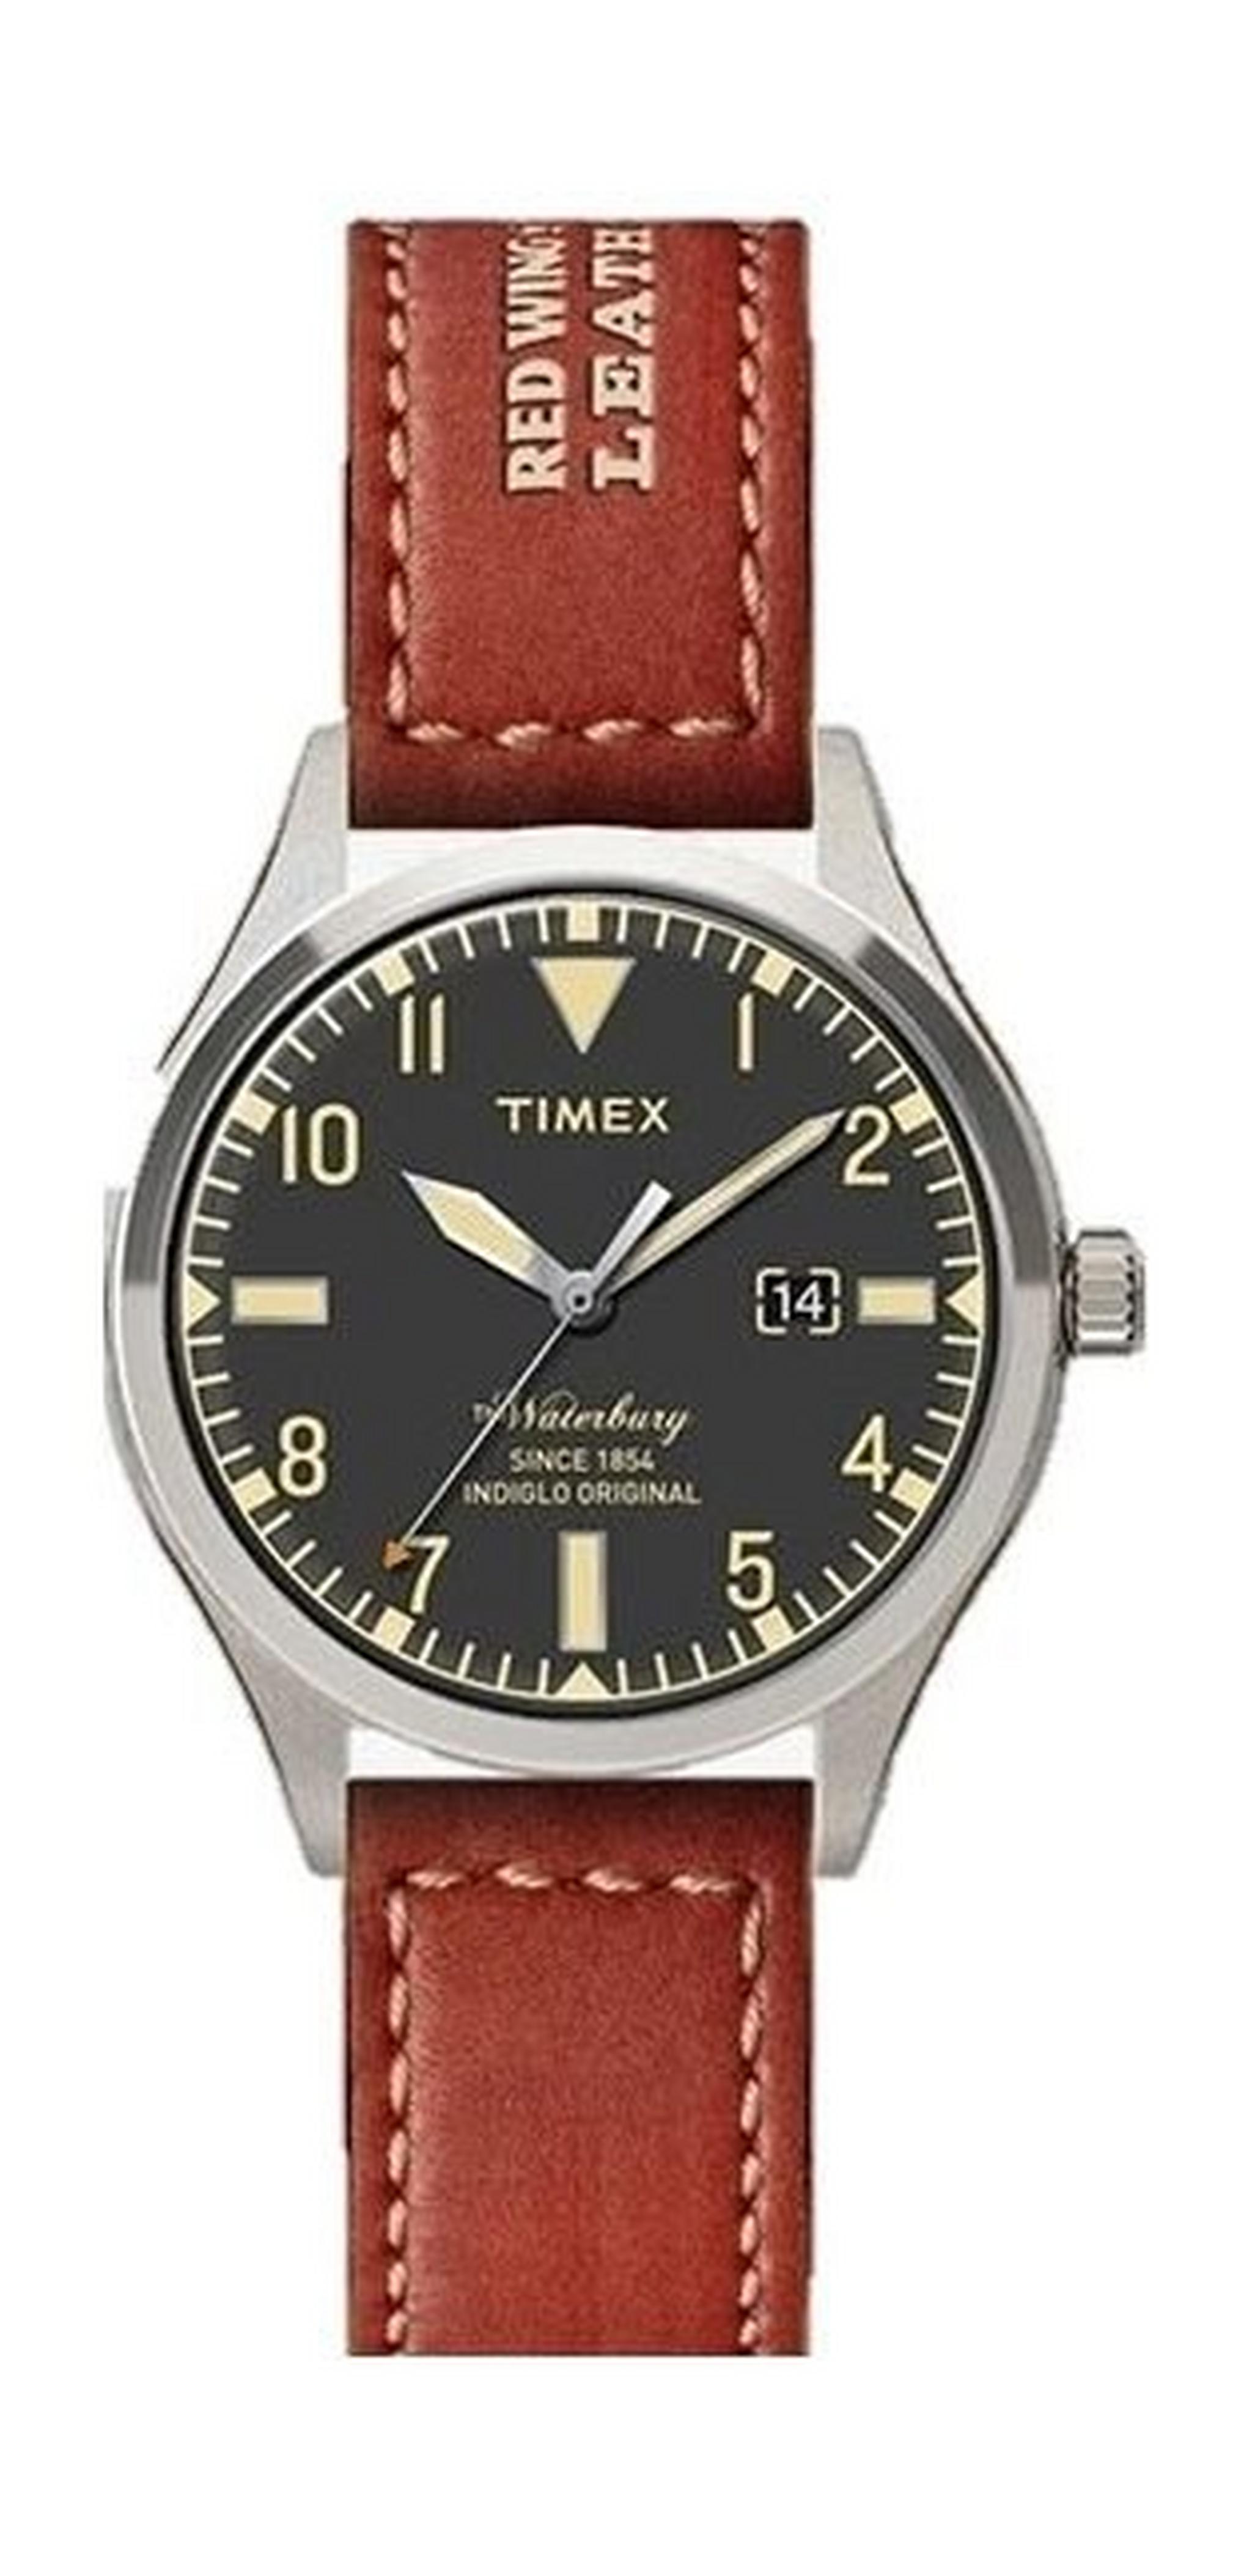 Timex Unisex Analog Watch - Leather Strap TW2P84000